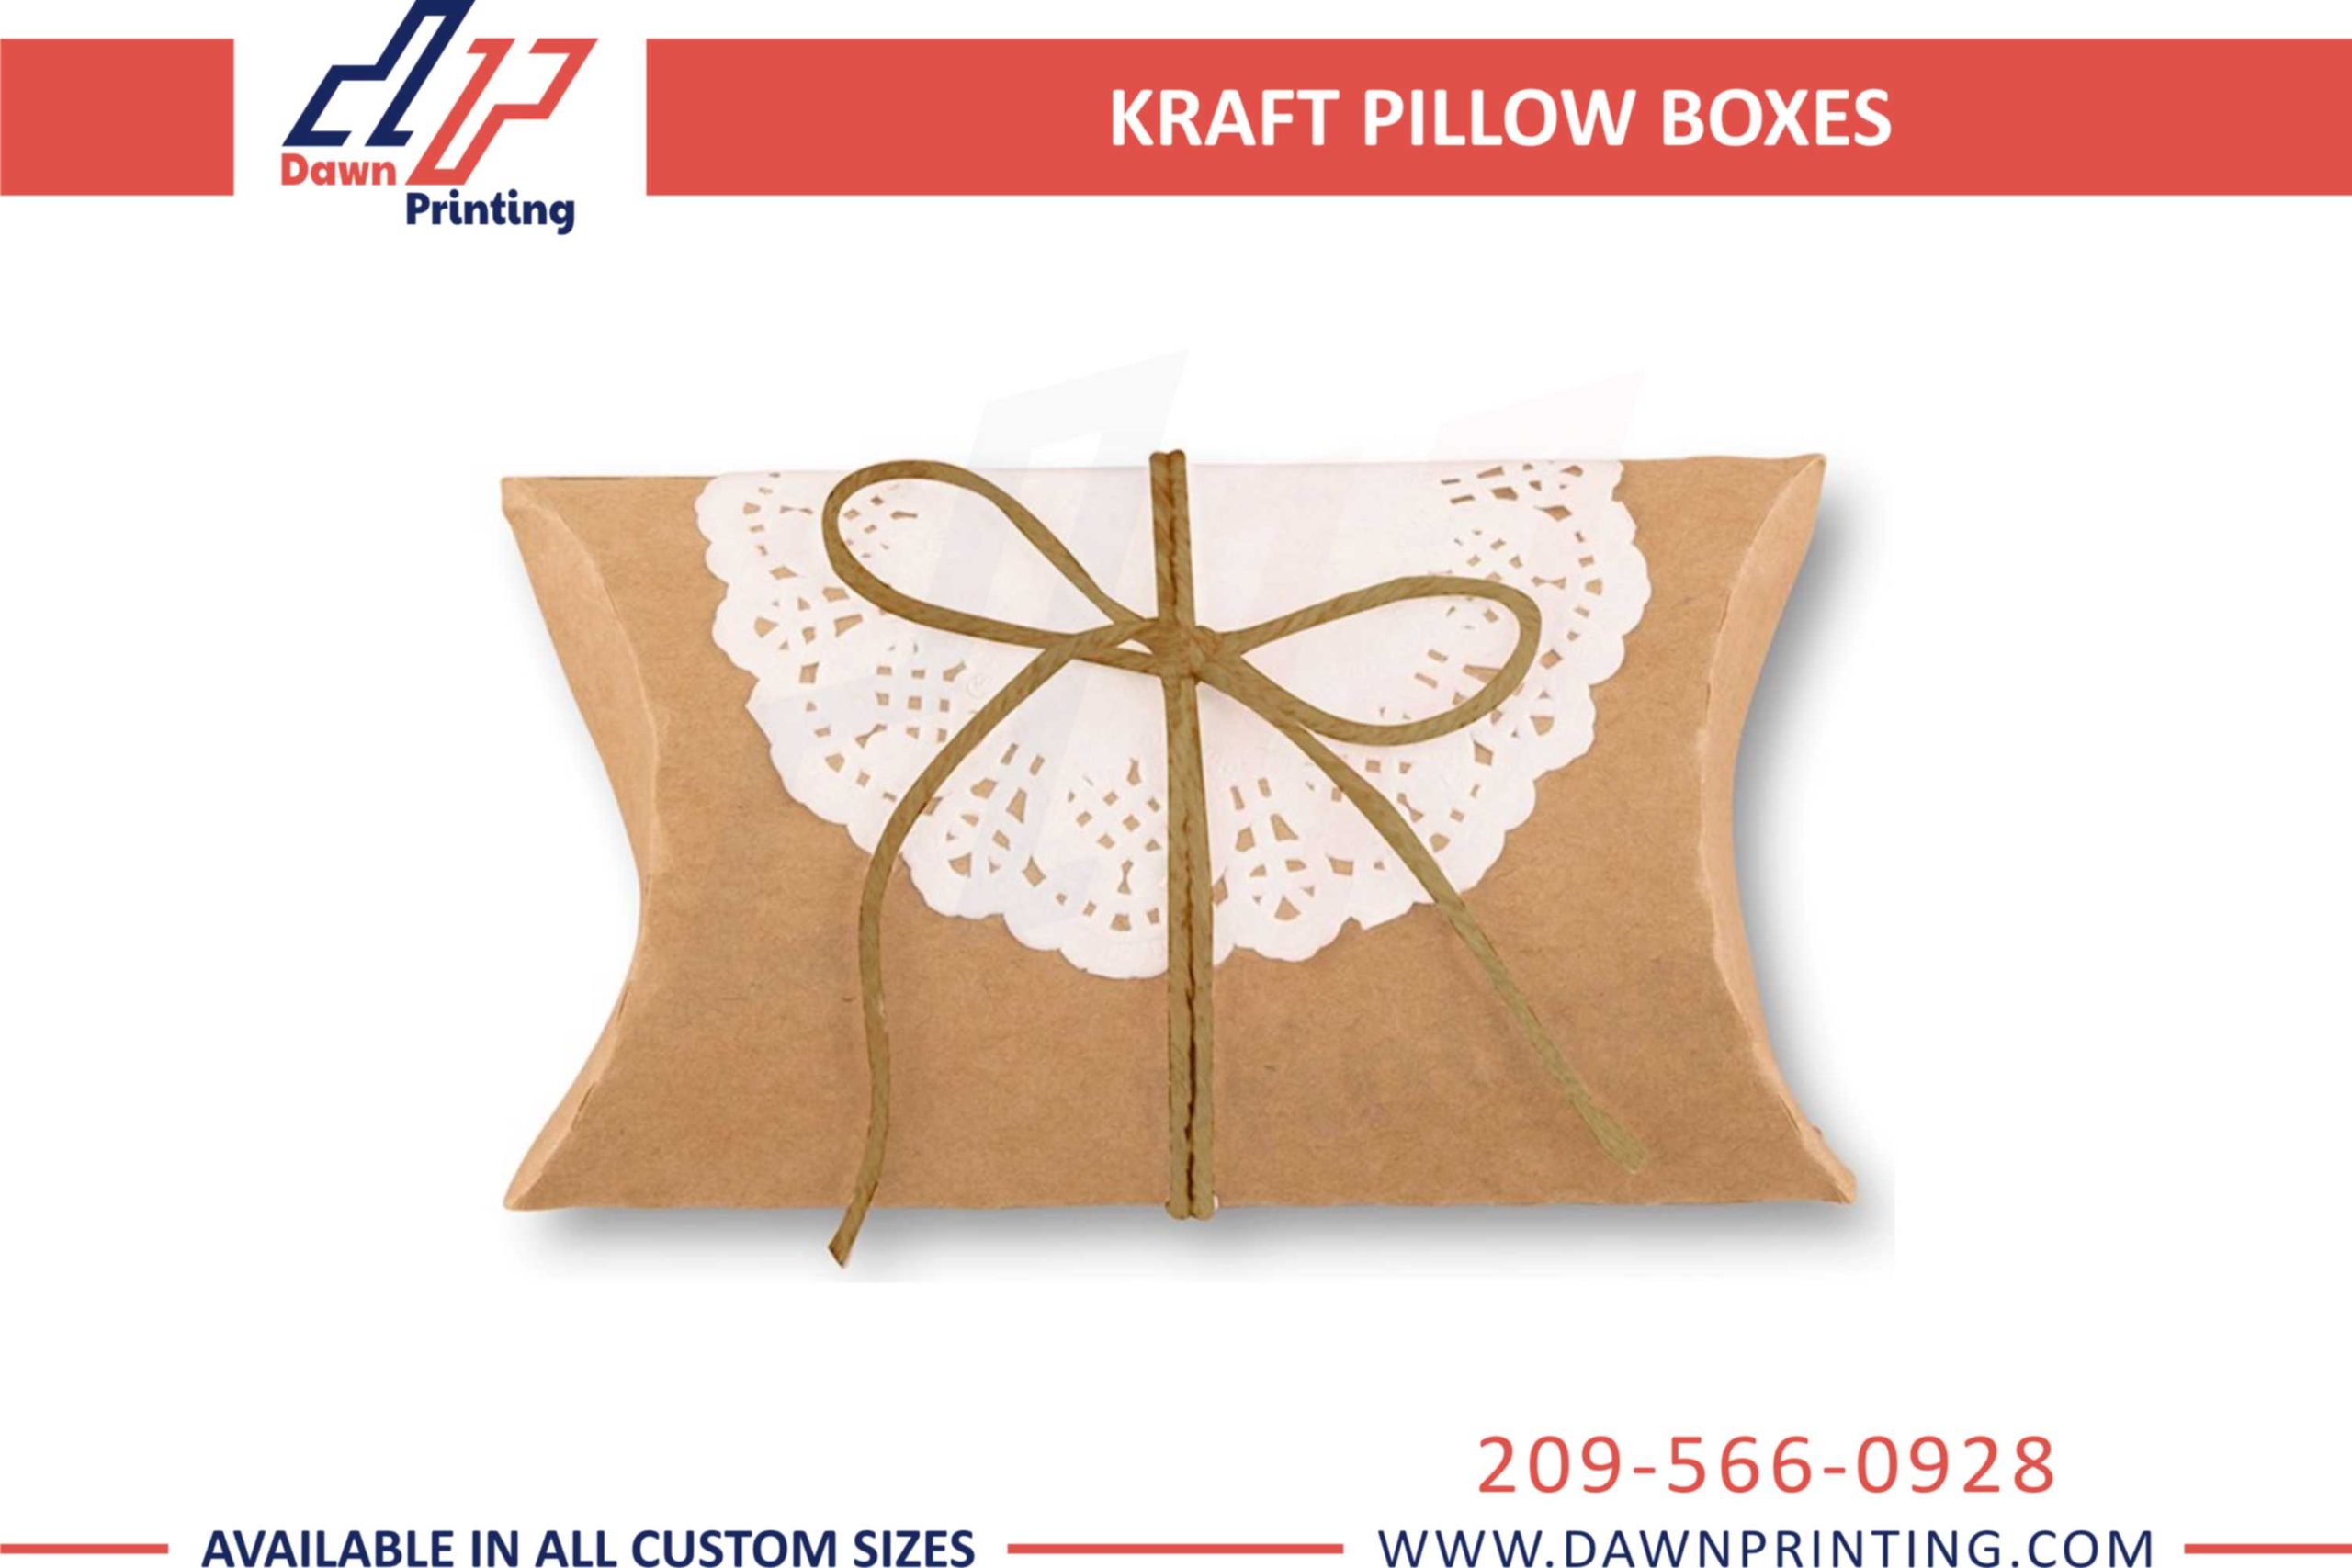 Printed Kraft Pillow Boxes - Dawn Printing